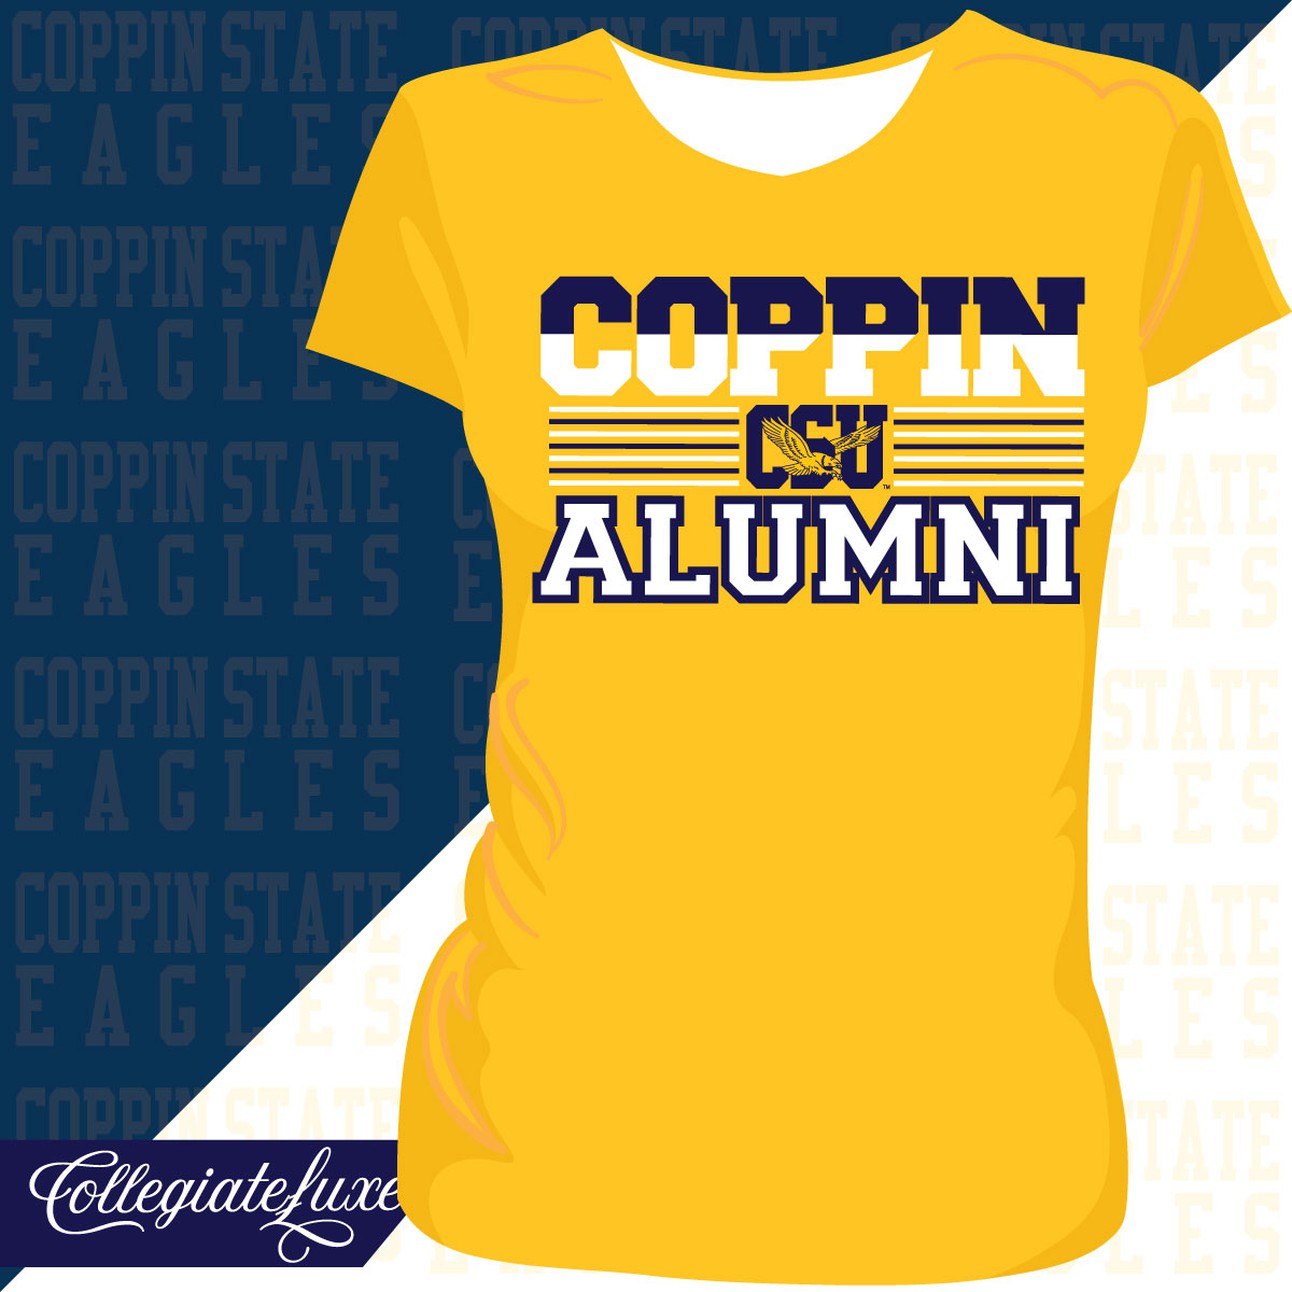 Coppin St. | ALUMNI Gold Ladies Tees